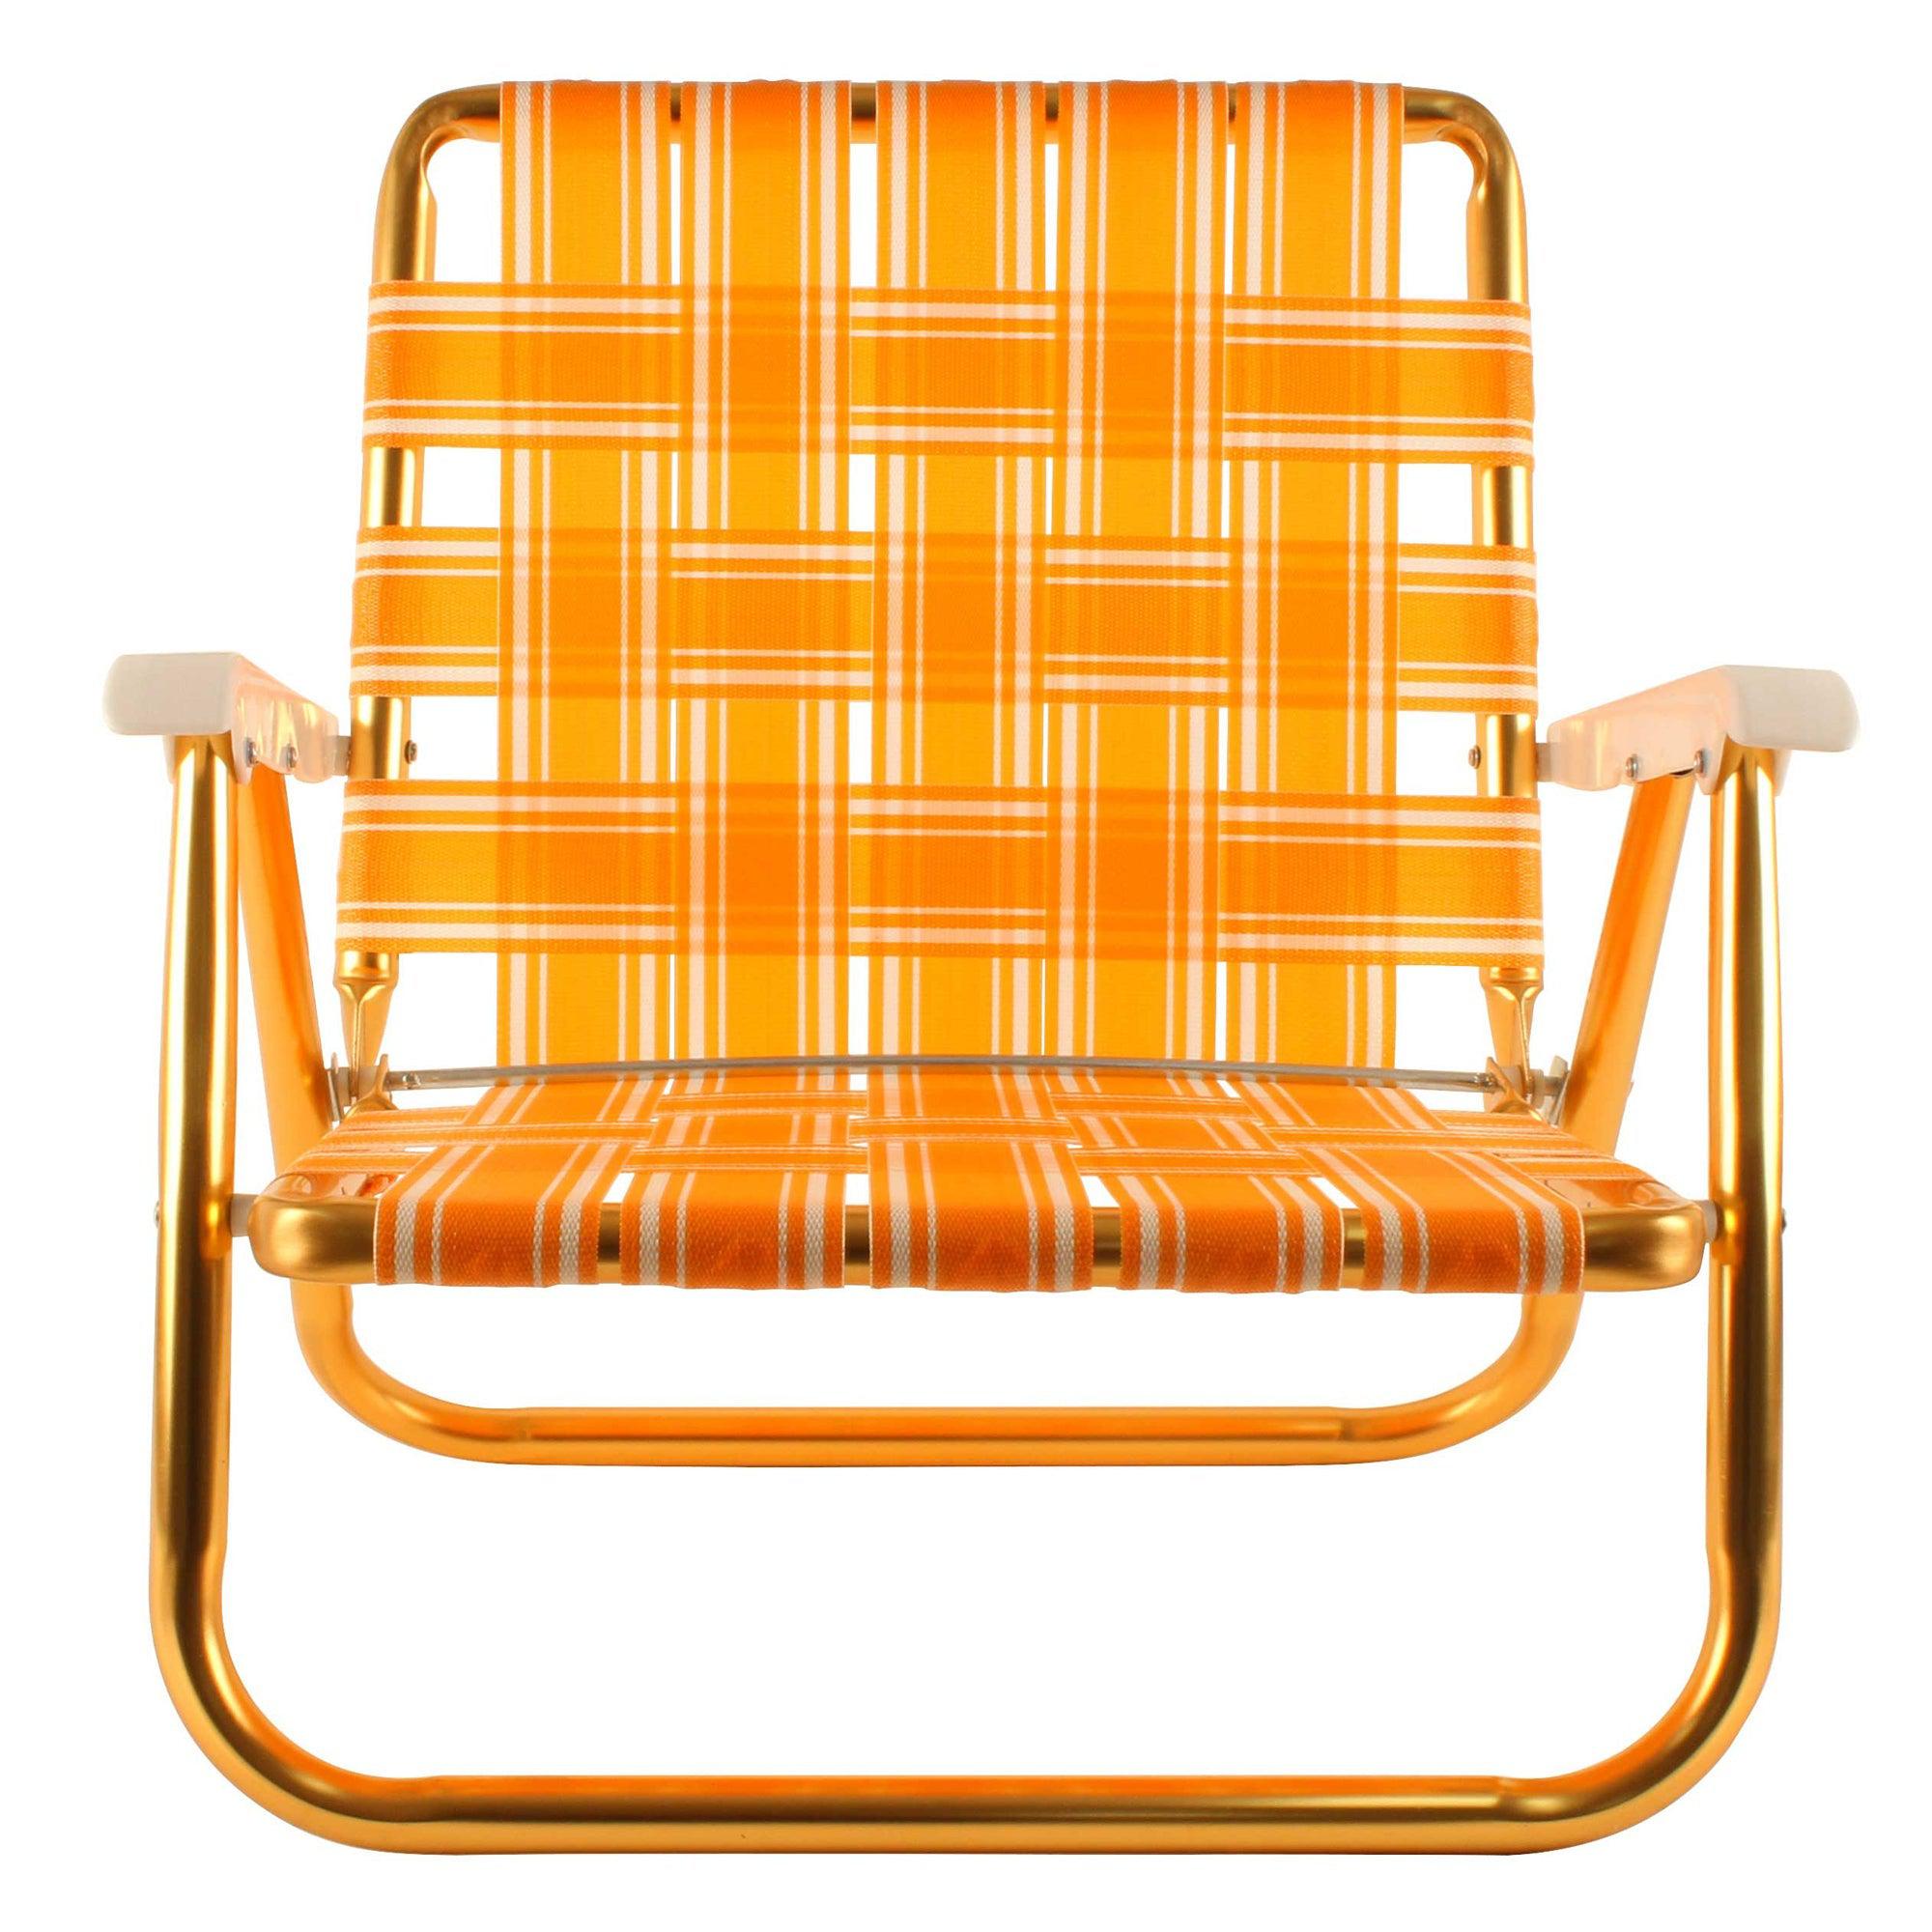 Retro Beach Chair - Mango-Travel & Outdoors-Good Vibes-The Bay Room